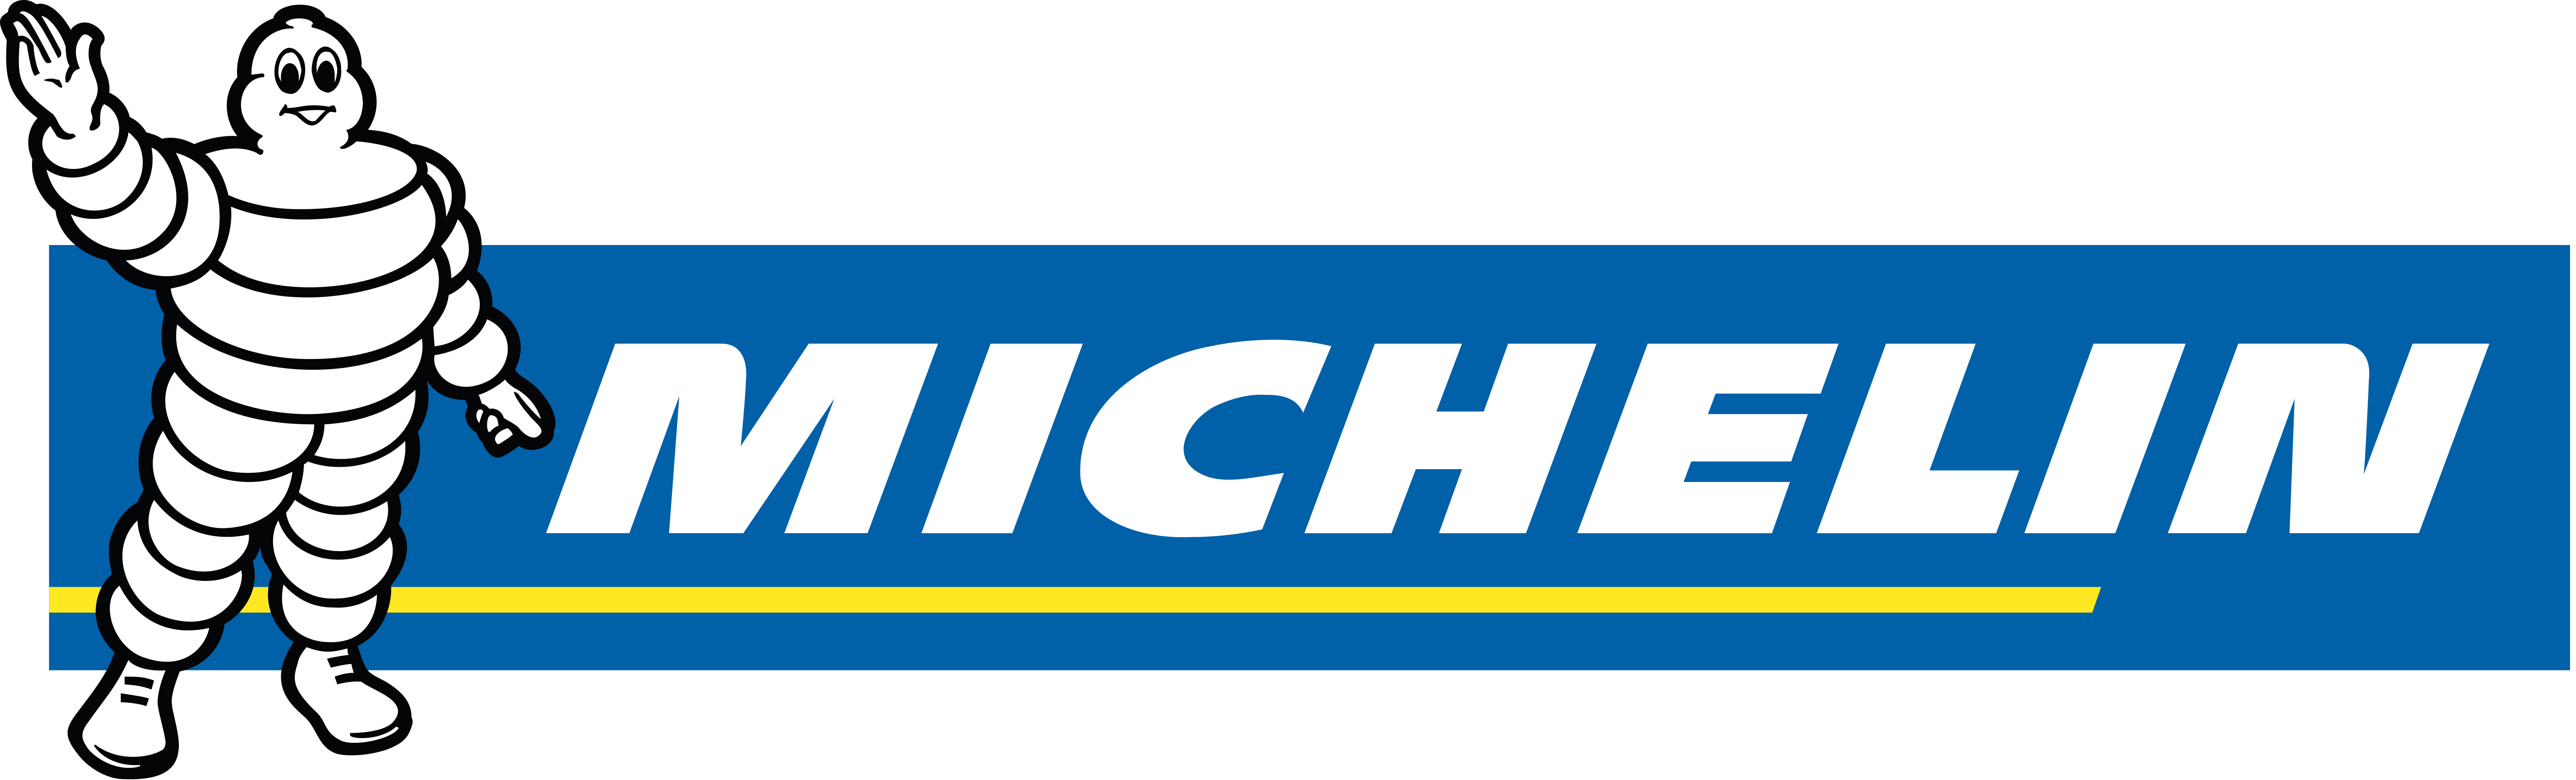 Michelin logo 2 - Michelin Logo